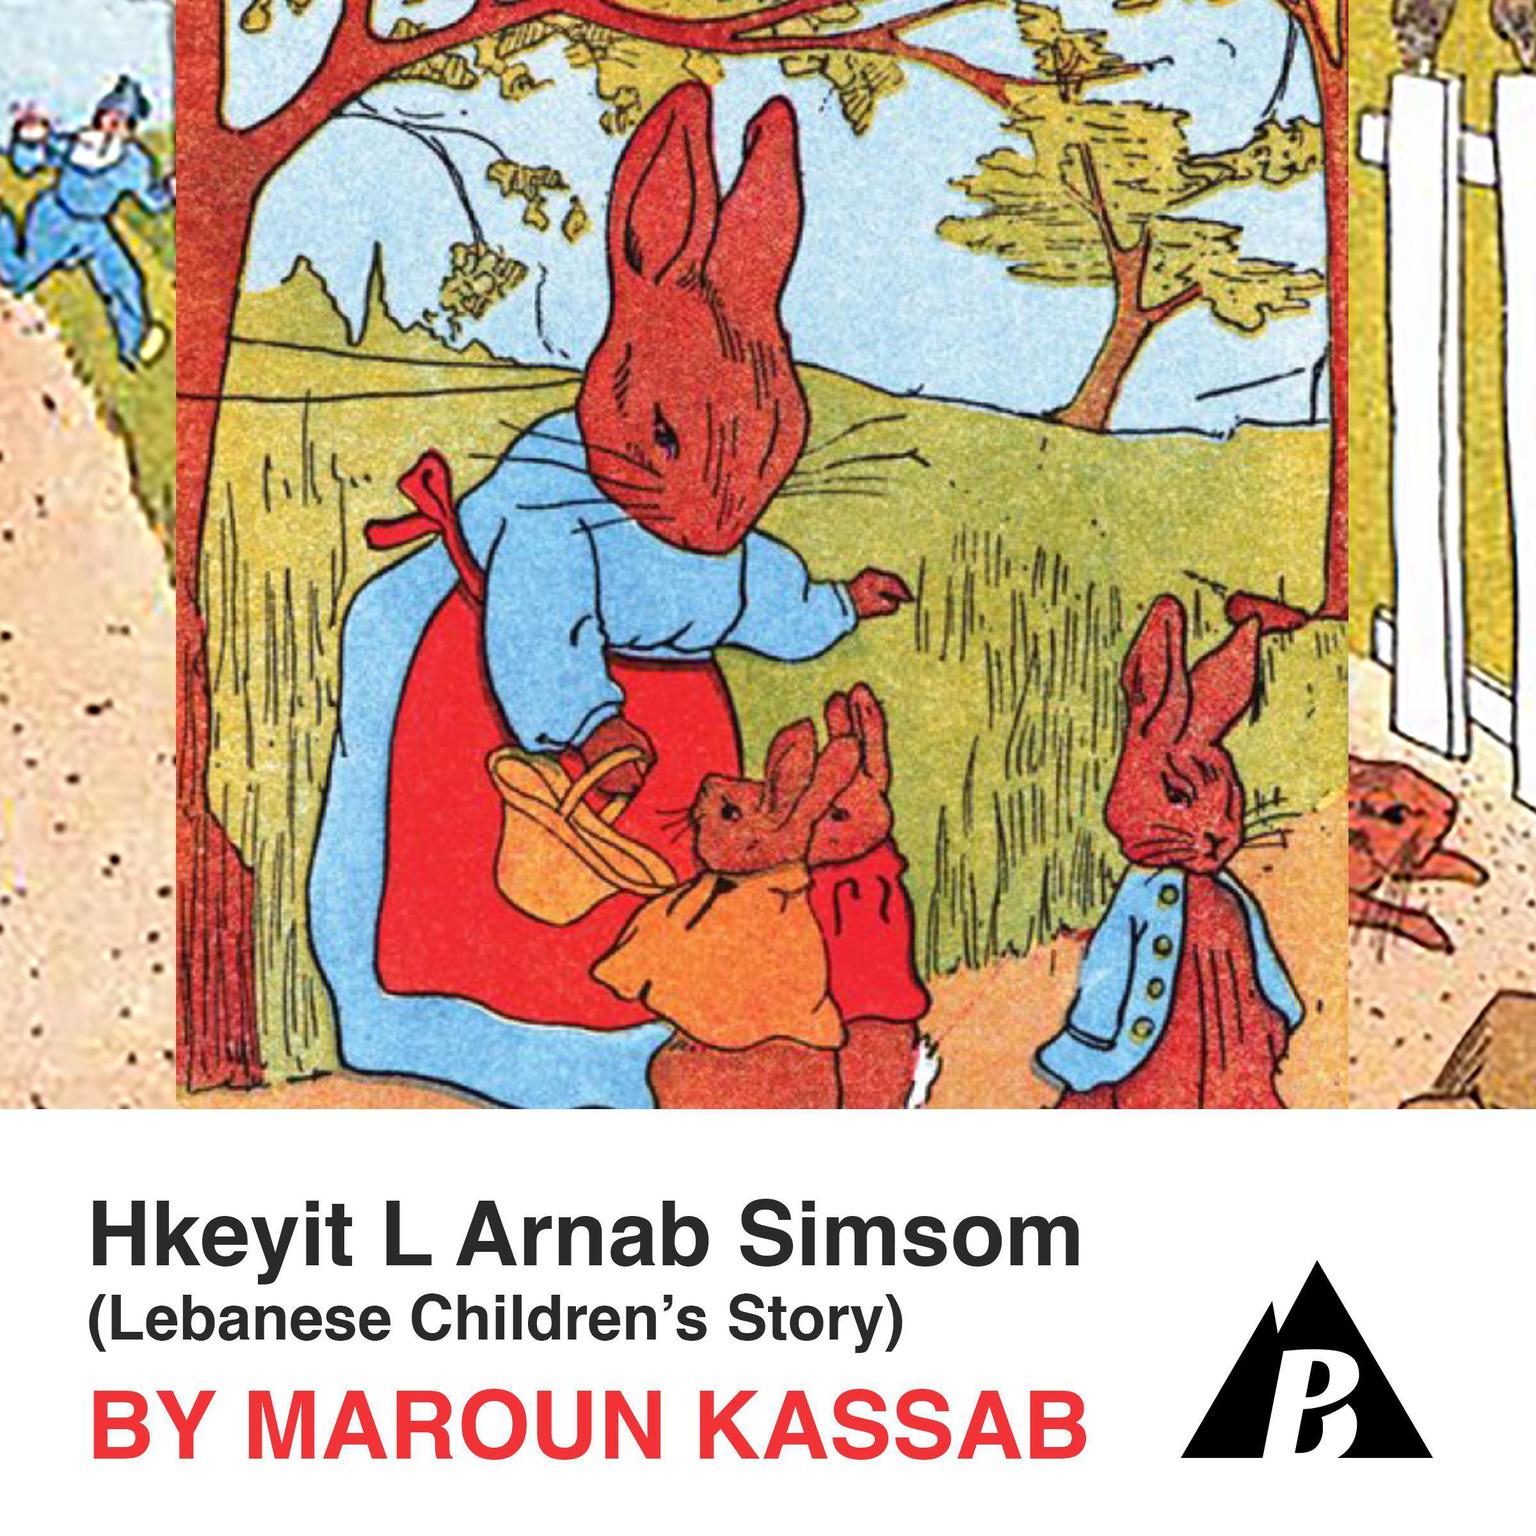 Hkeyit L Arnab Simsom (The Story of Arnab Simsom): A Lebanese Children’s Story Audiobook, by Maroun Kassab